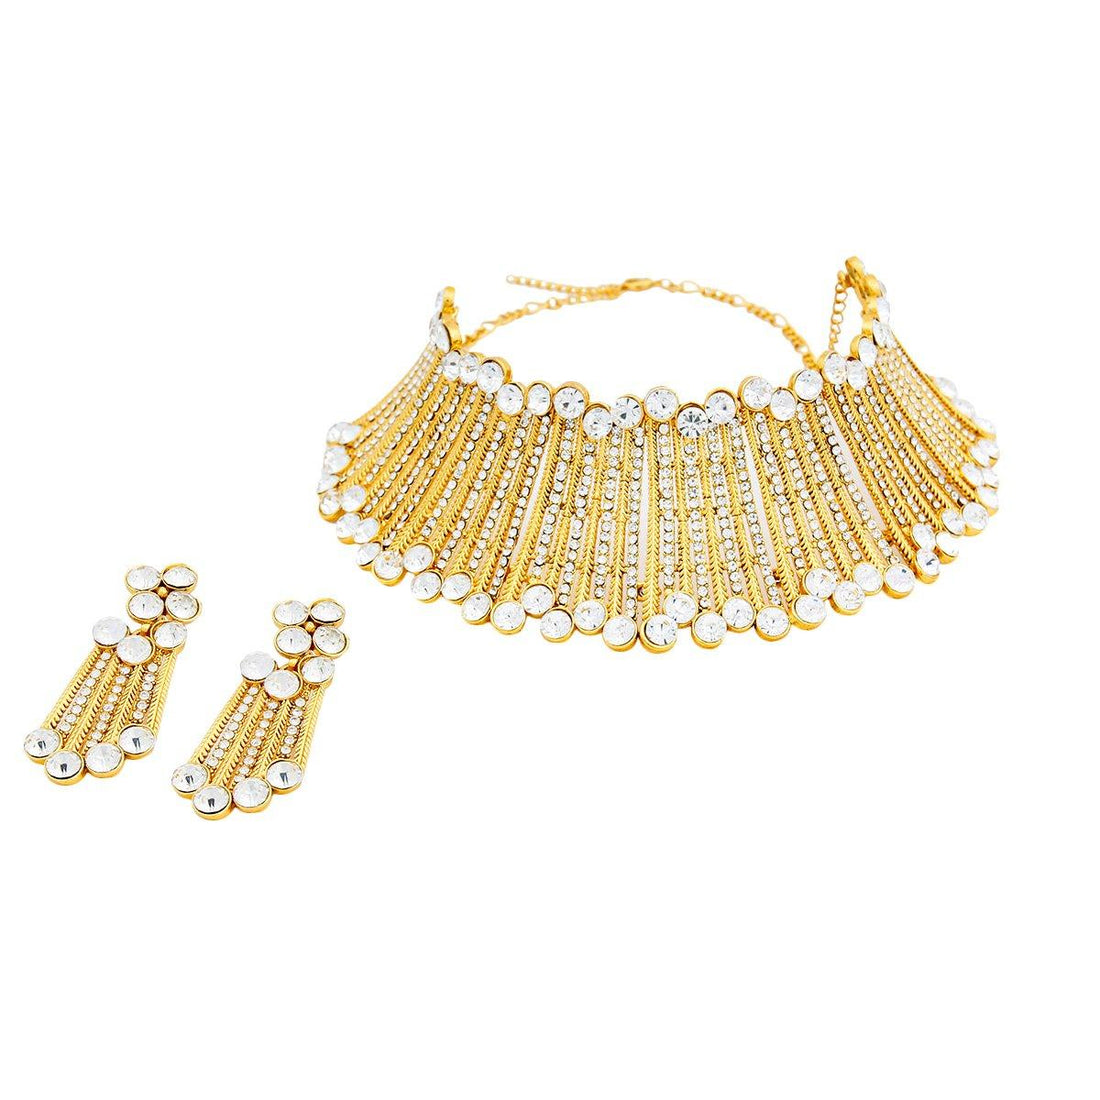 Gold Bar and Round Rhinestone Rigid Collar Choker Necklace Set